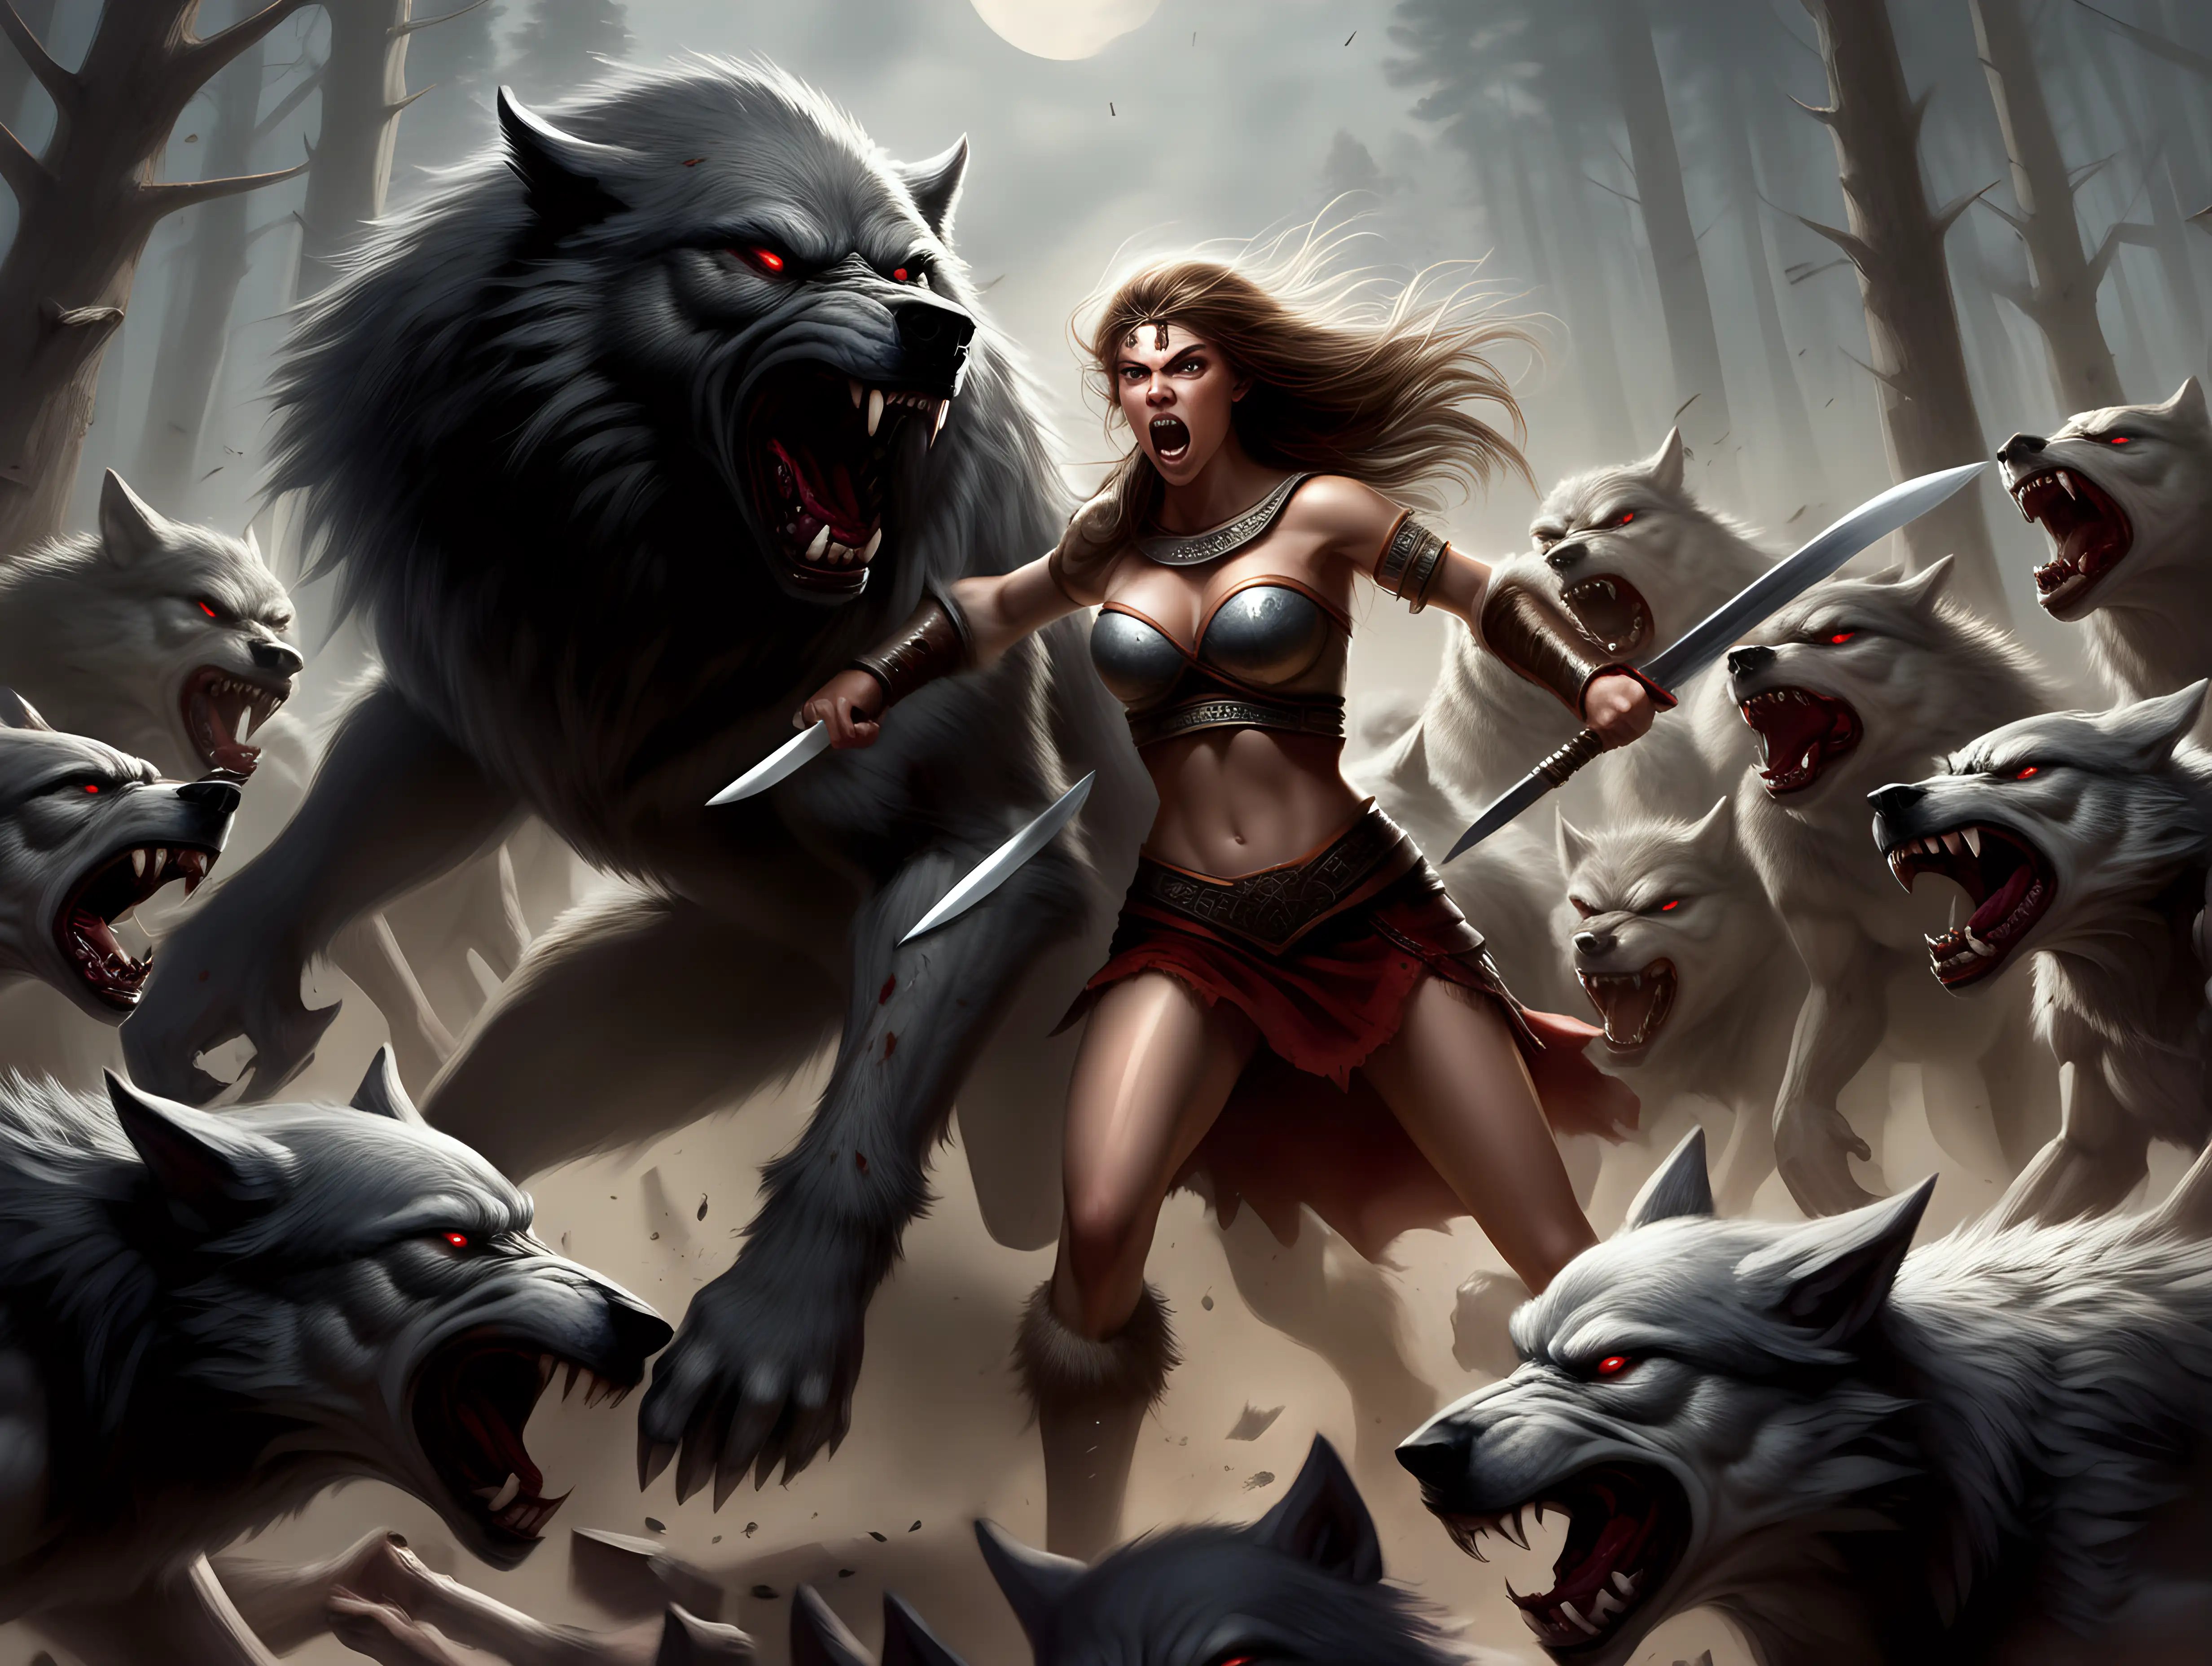 warrior princess fighting a horde of werewolfs